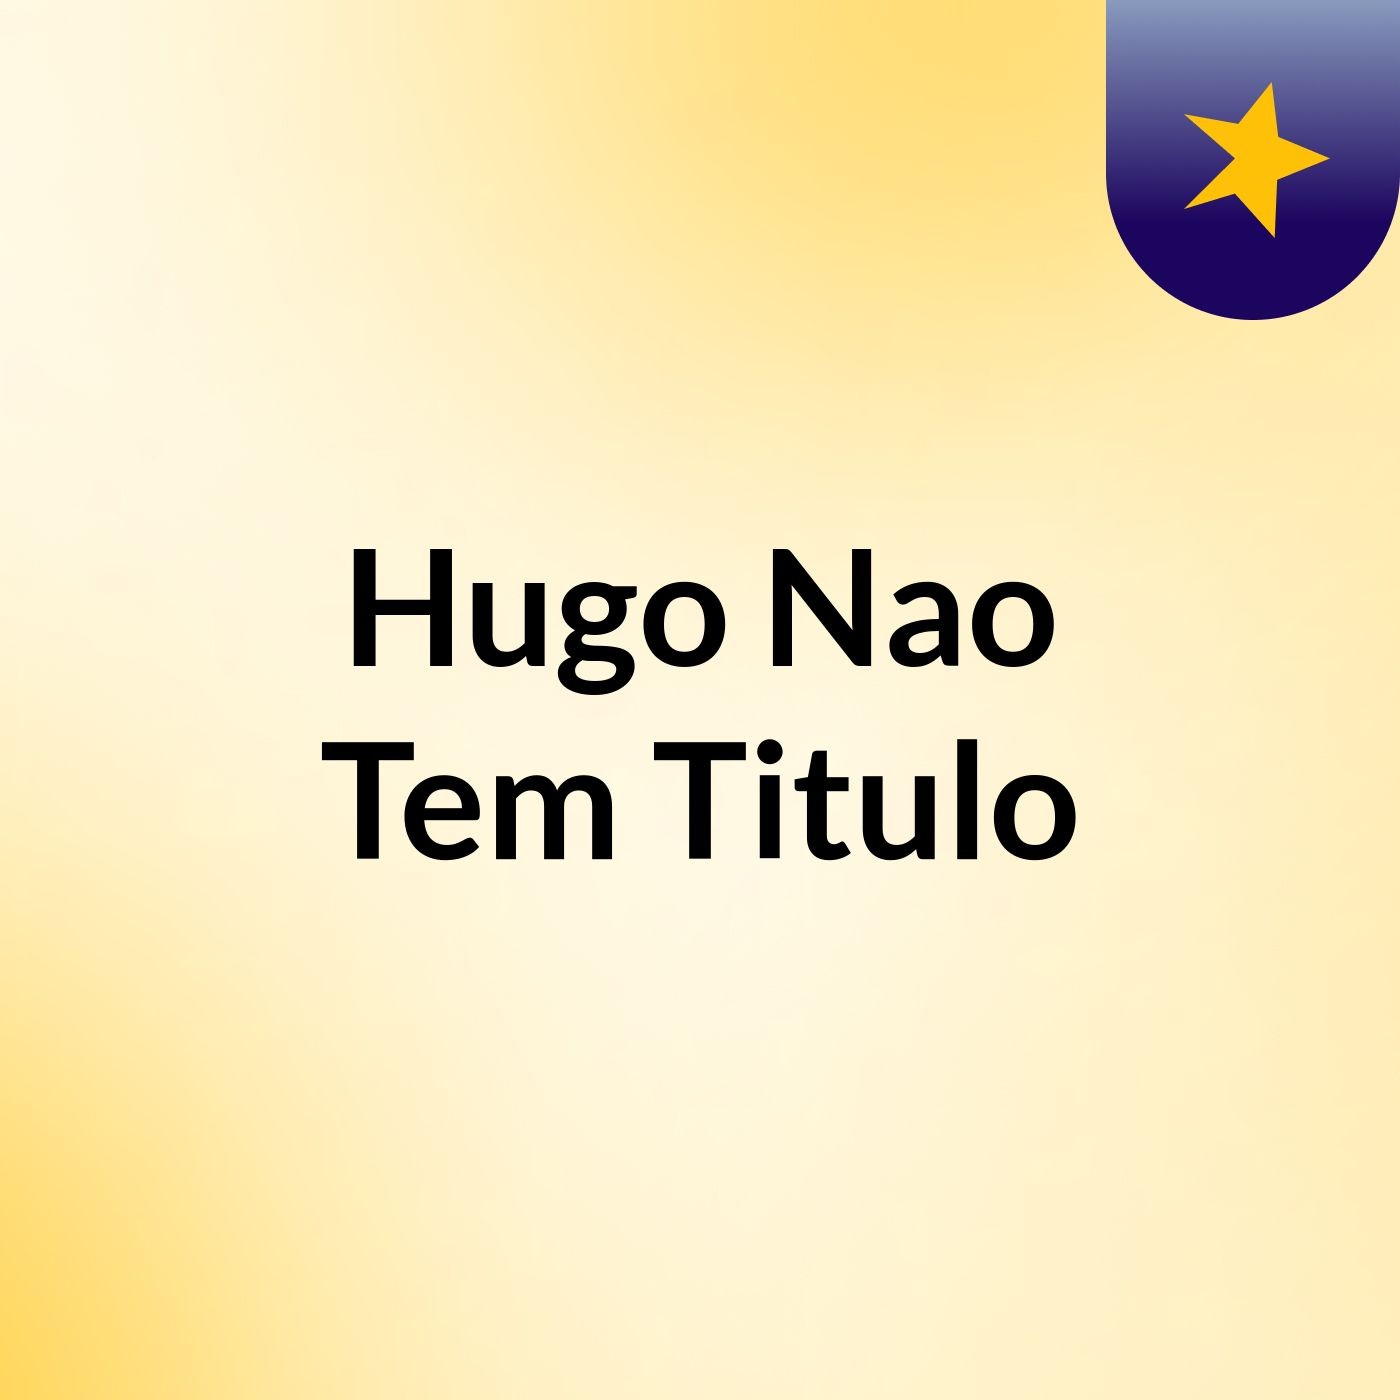 Hugo Nao Tem Titulo